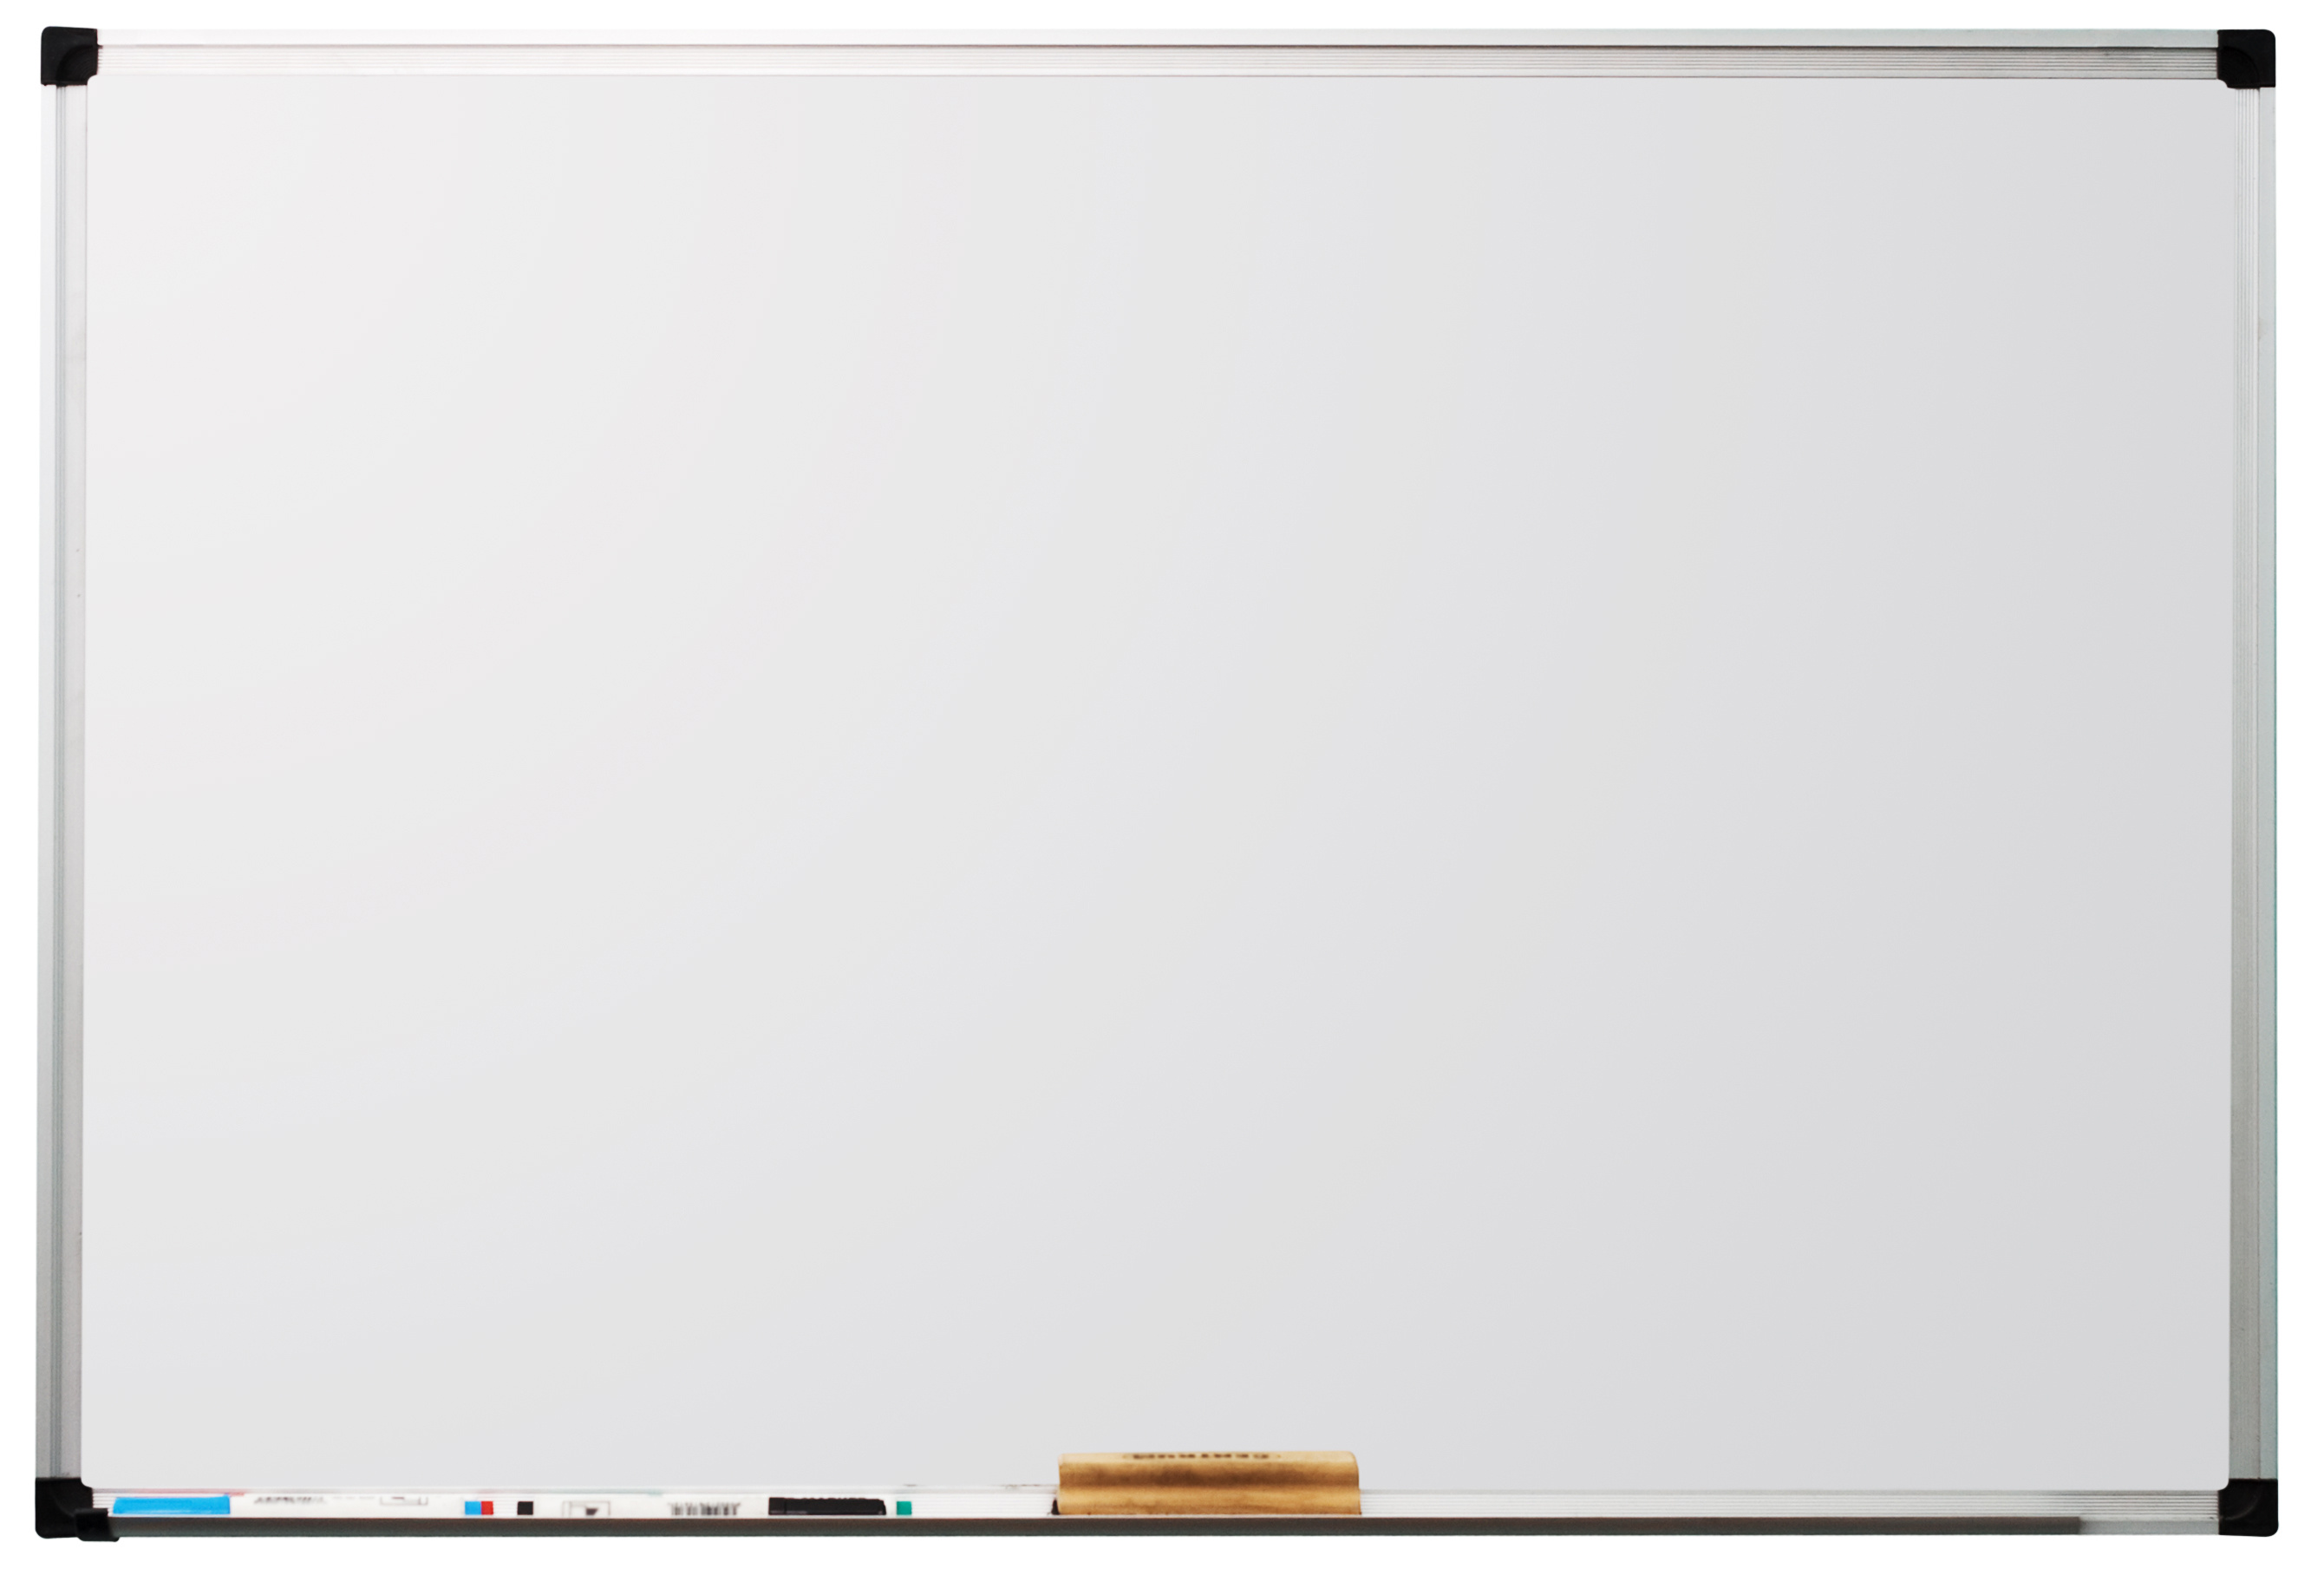 Whiteboard Wallpaper HD Base